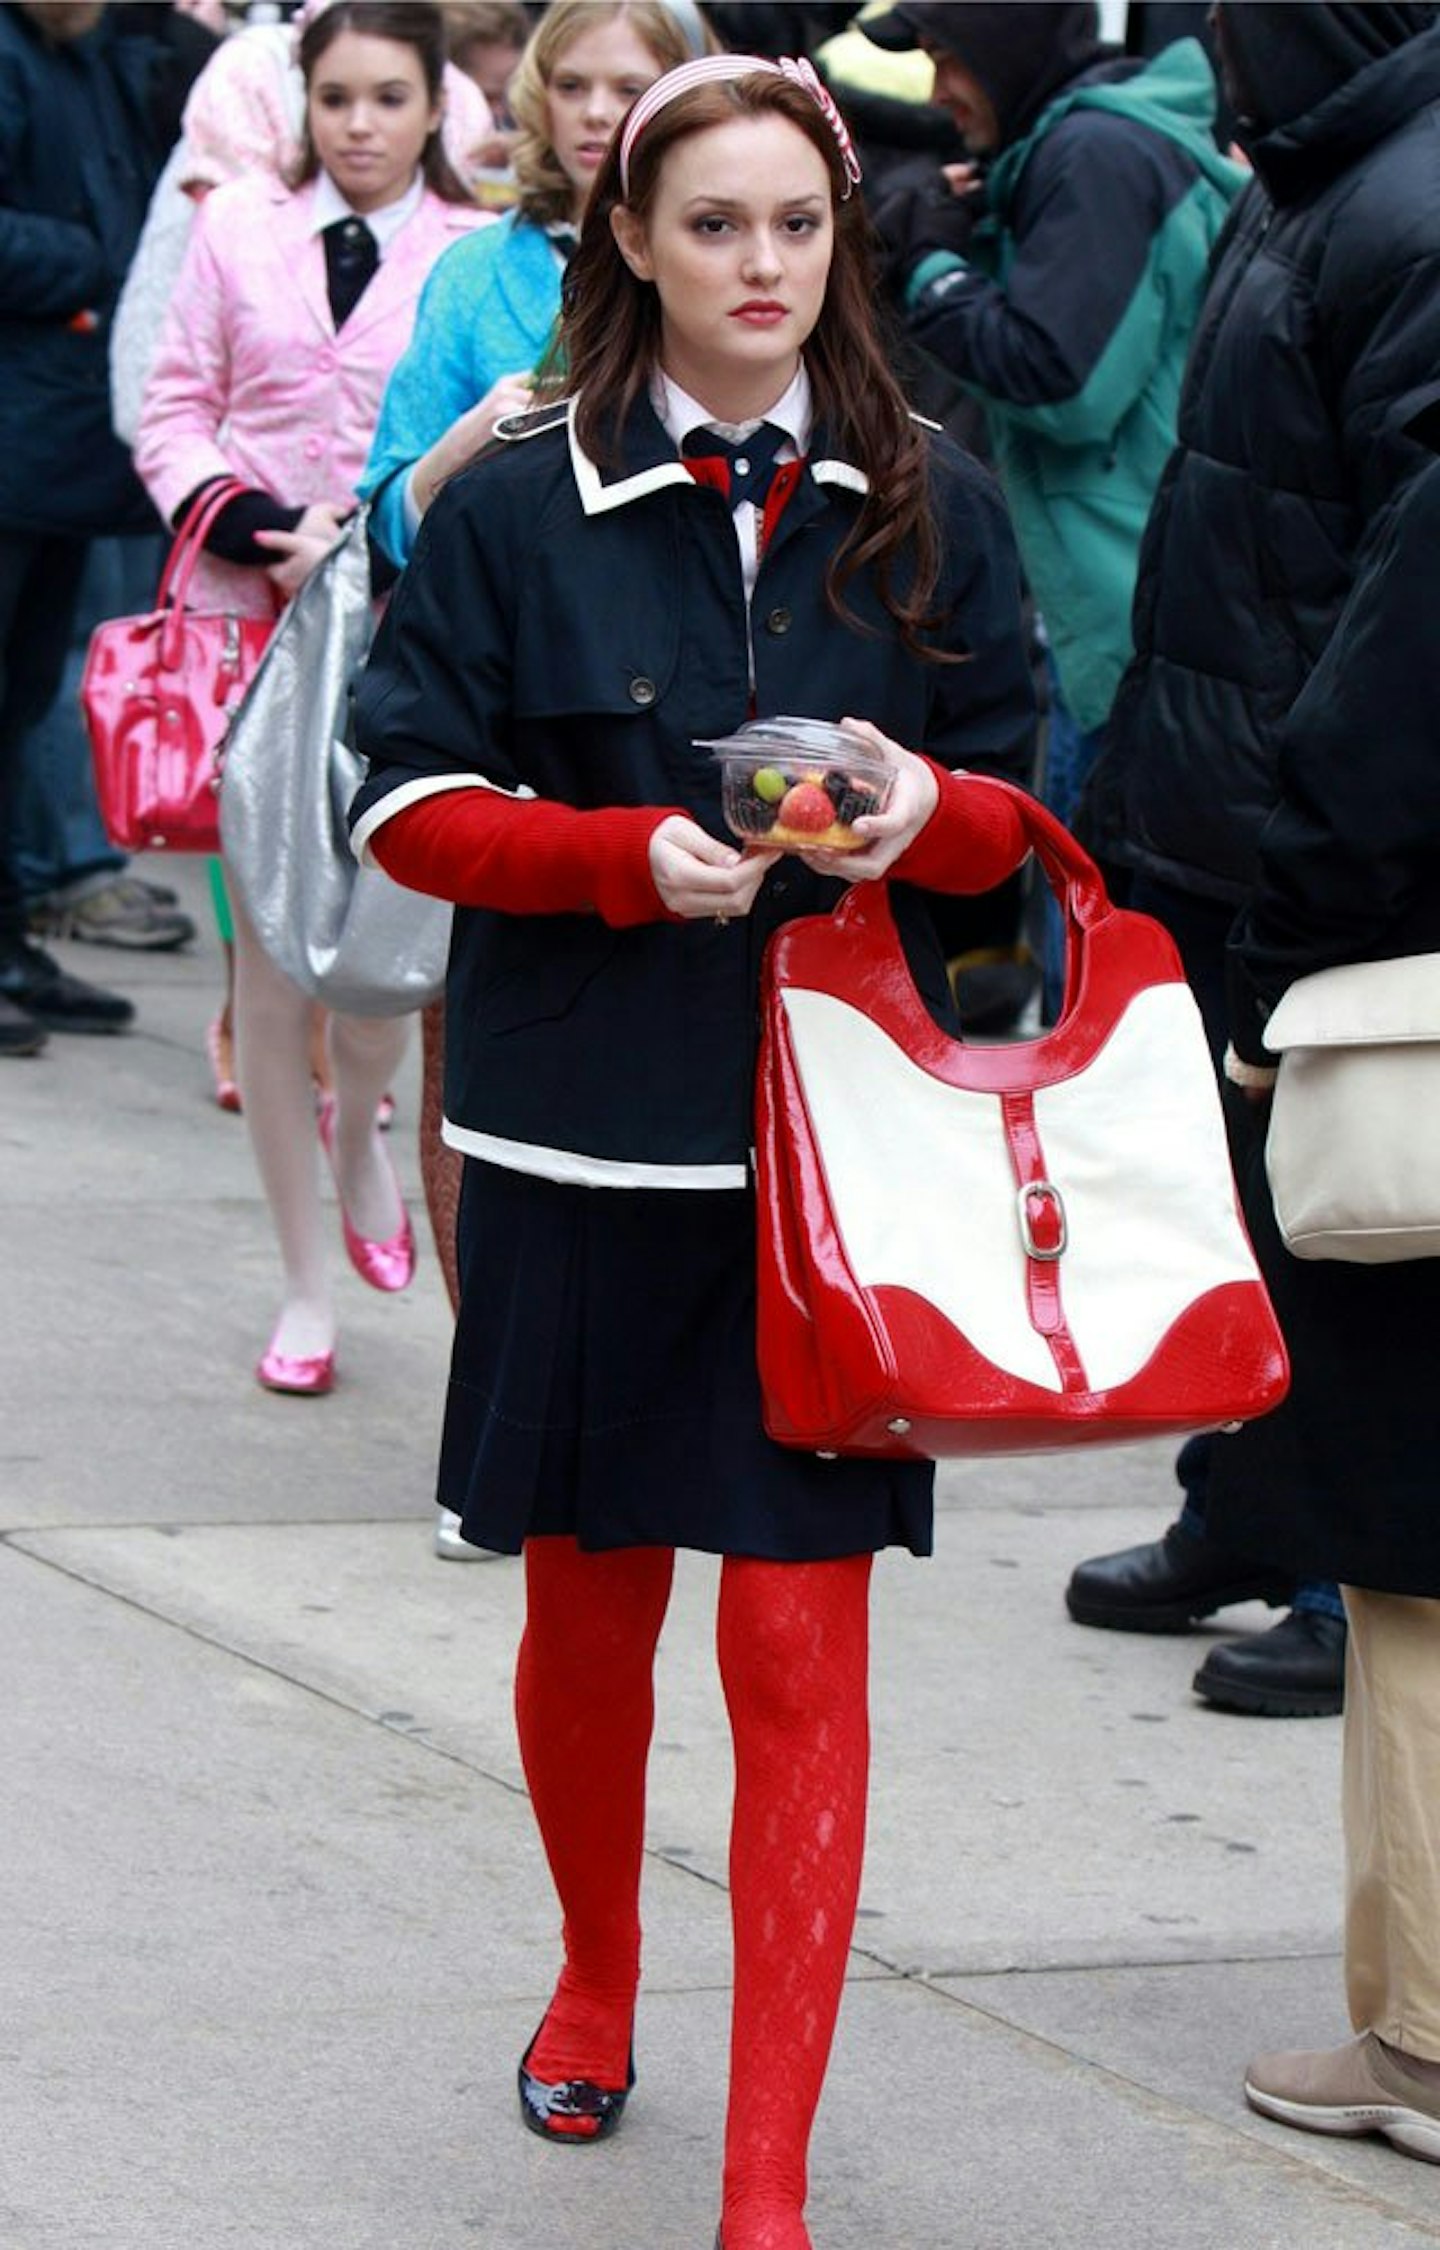 Blair Waldorf wearing red tights